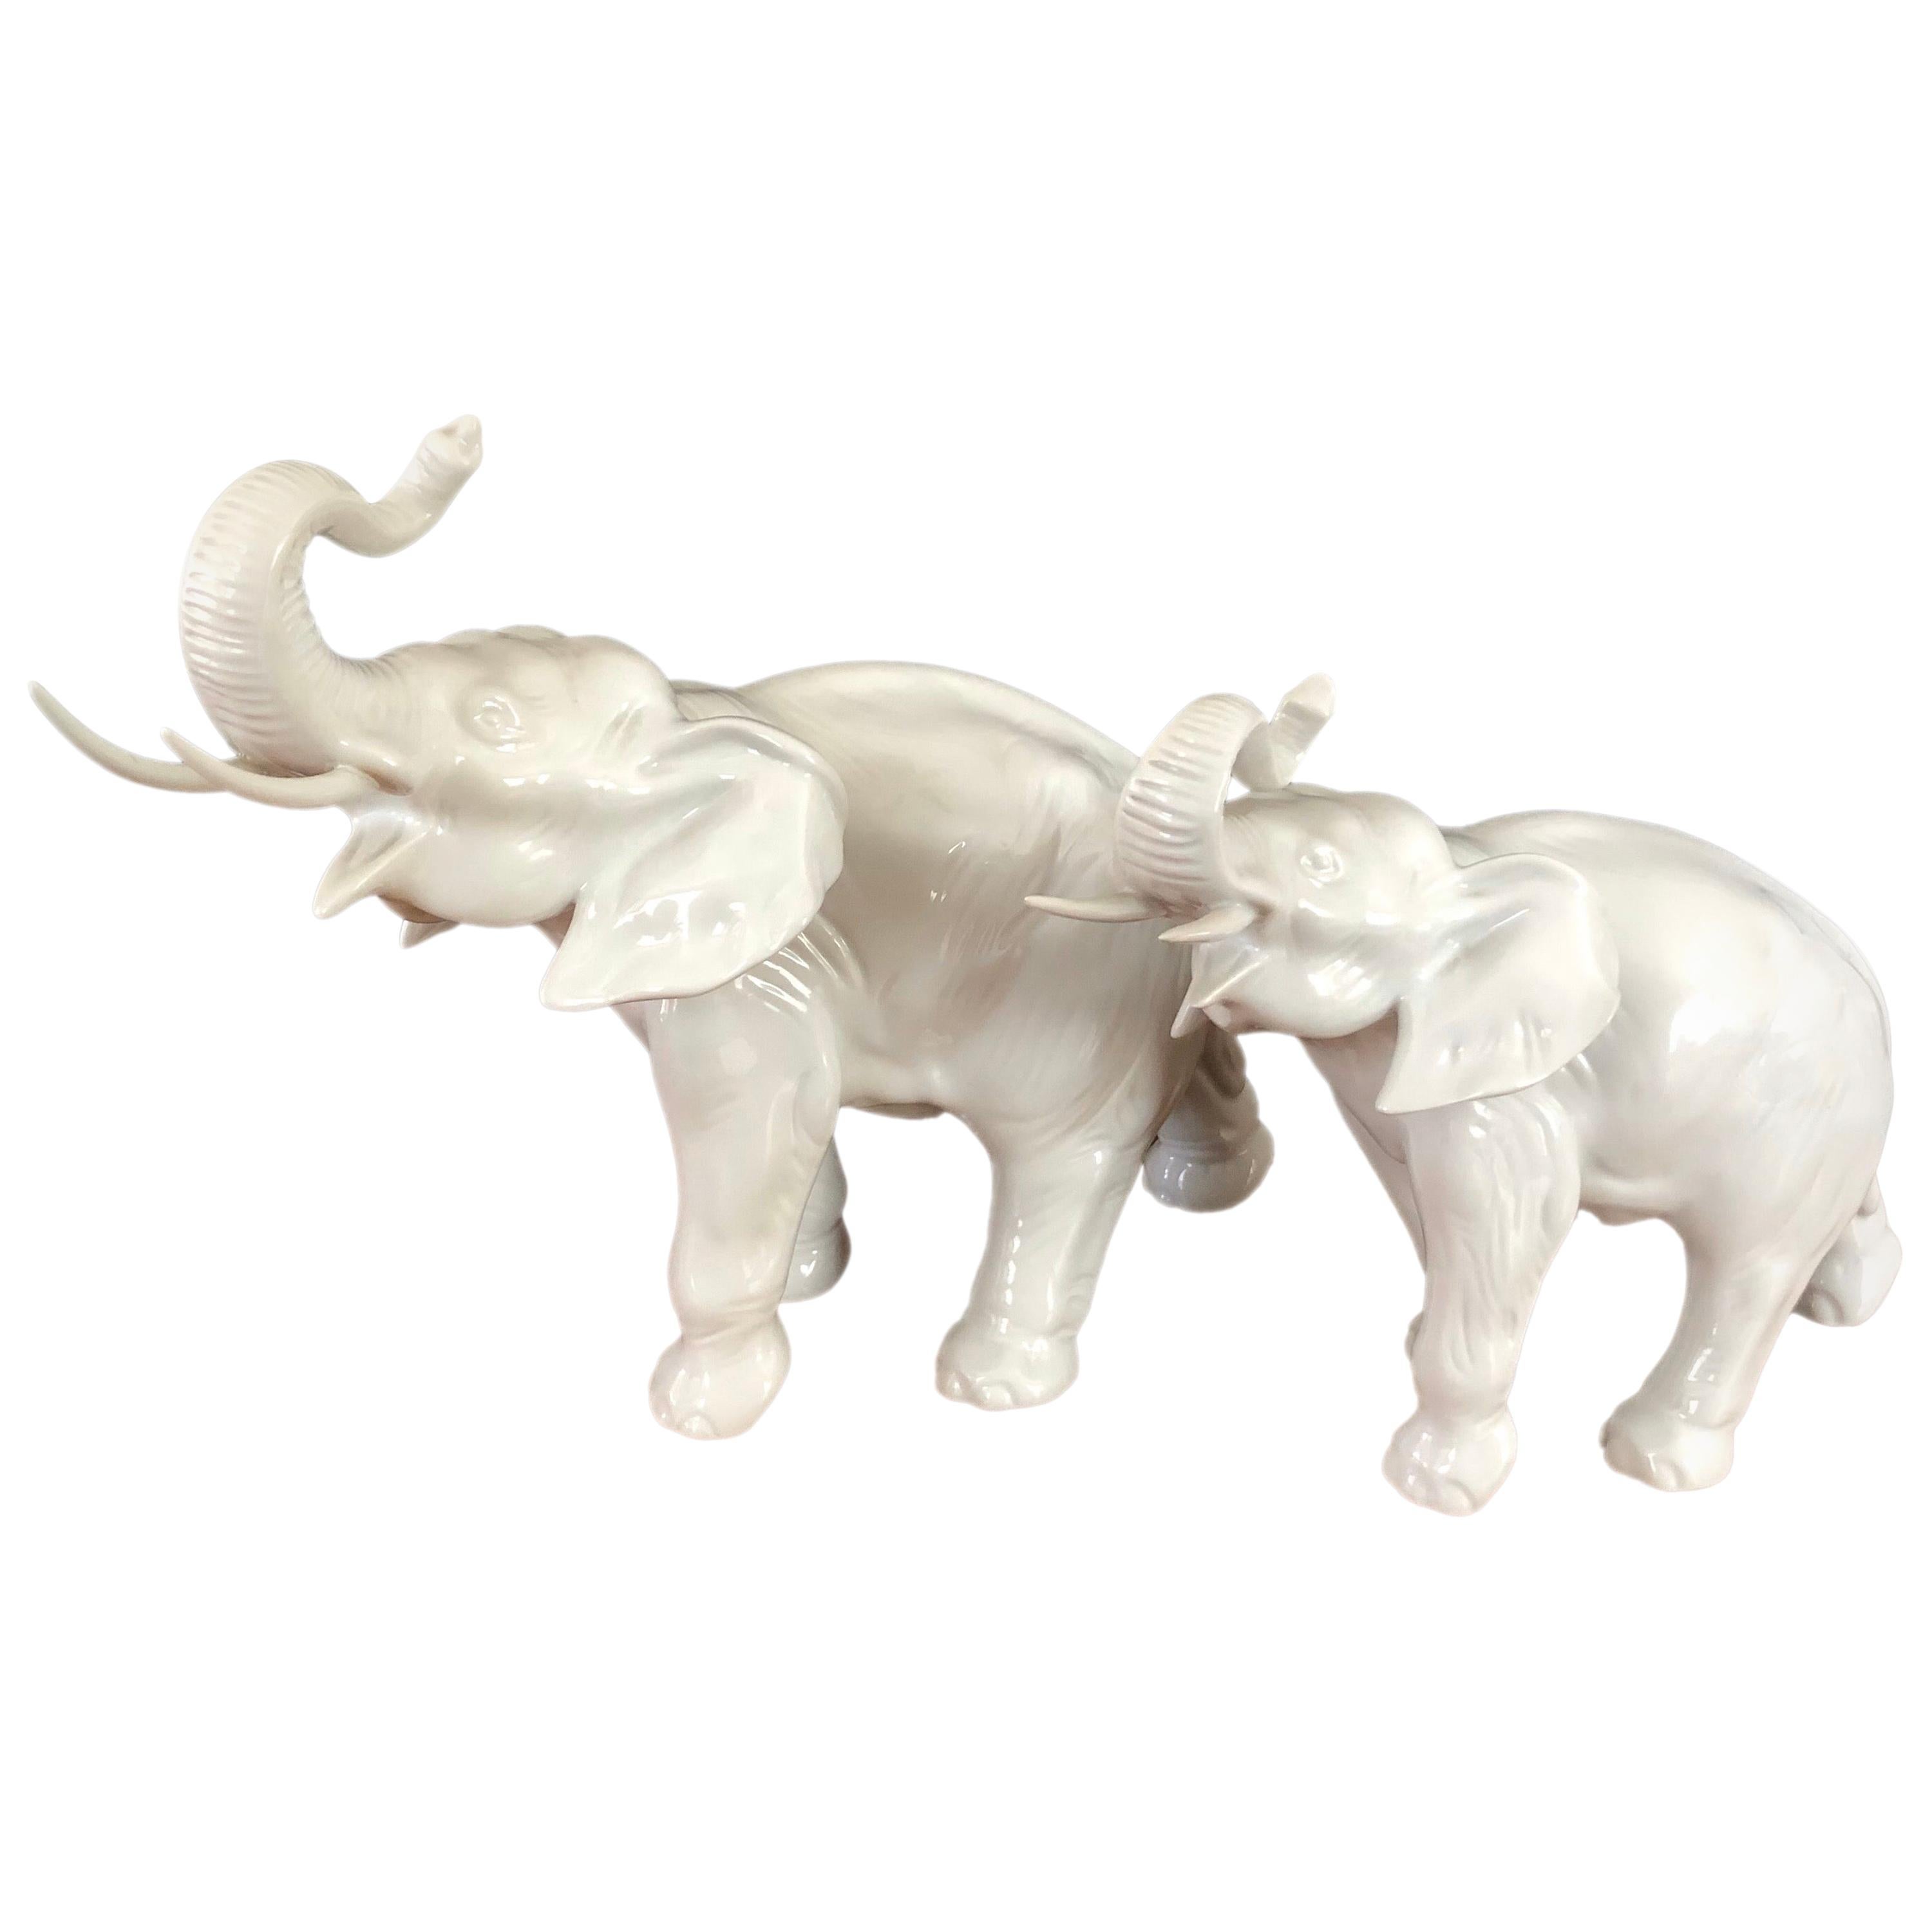 Pair of White Porcelain Elephant Sculptures by Royal Dux For Sale